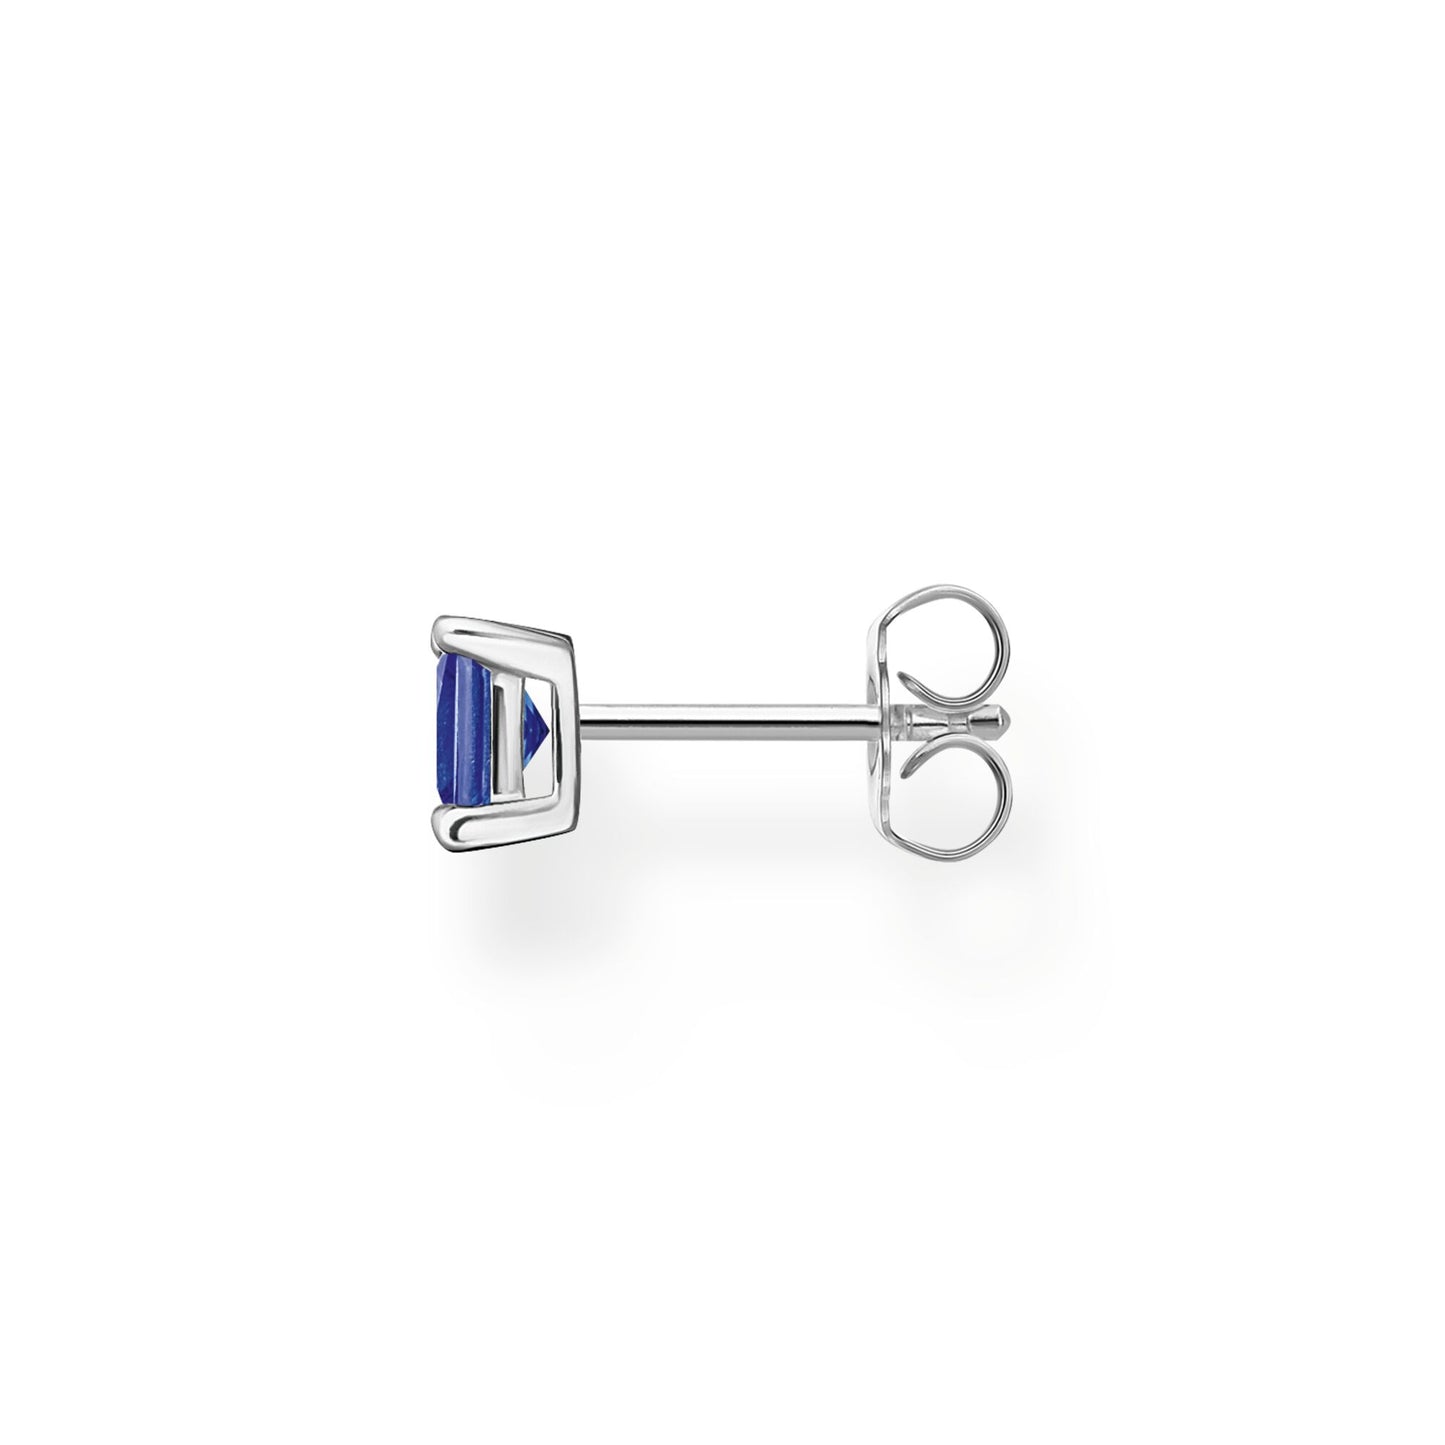 Thomas Sabo Single Ear Stud With Blue Stone Silver H2233-699-32